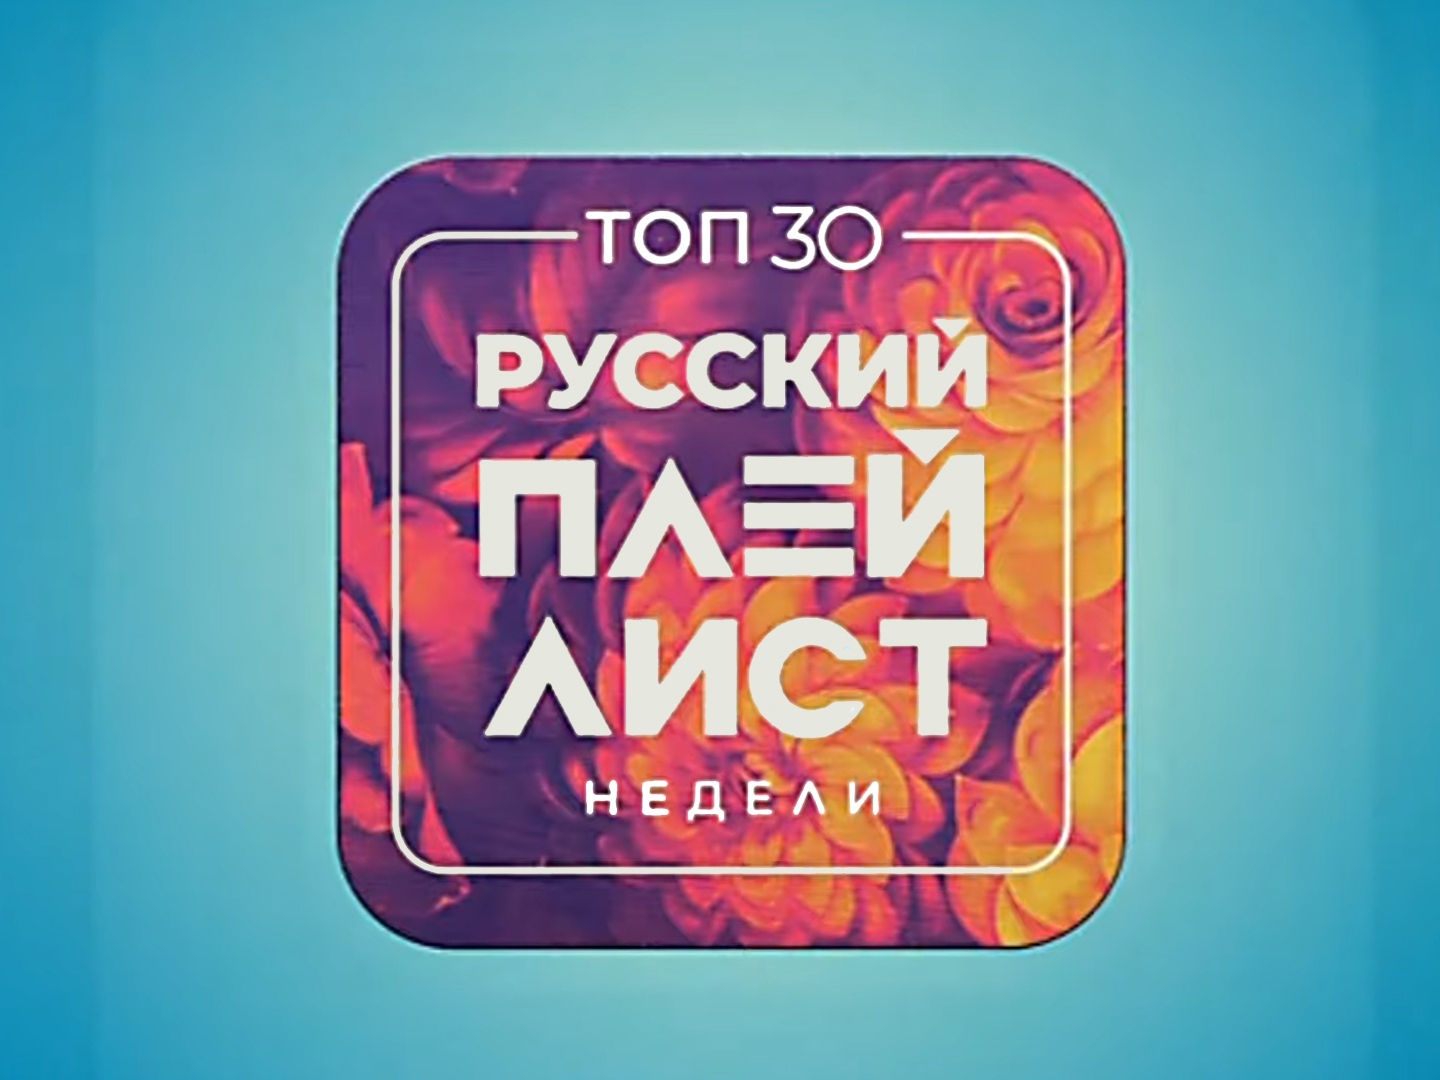 Русский playlist. Муз ТВ 30 крутяк недели. Муз ТВ чарт 2022. Телеканал муз ТВ. Топ 30 русский плейлист недели.